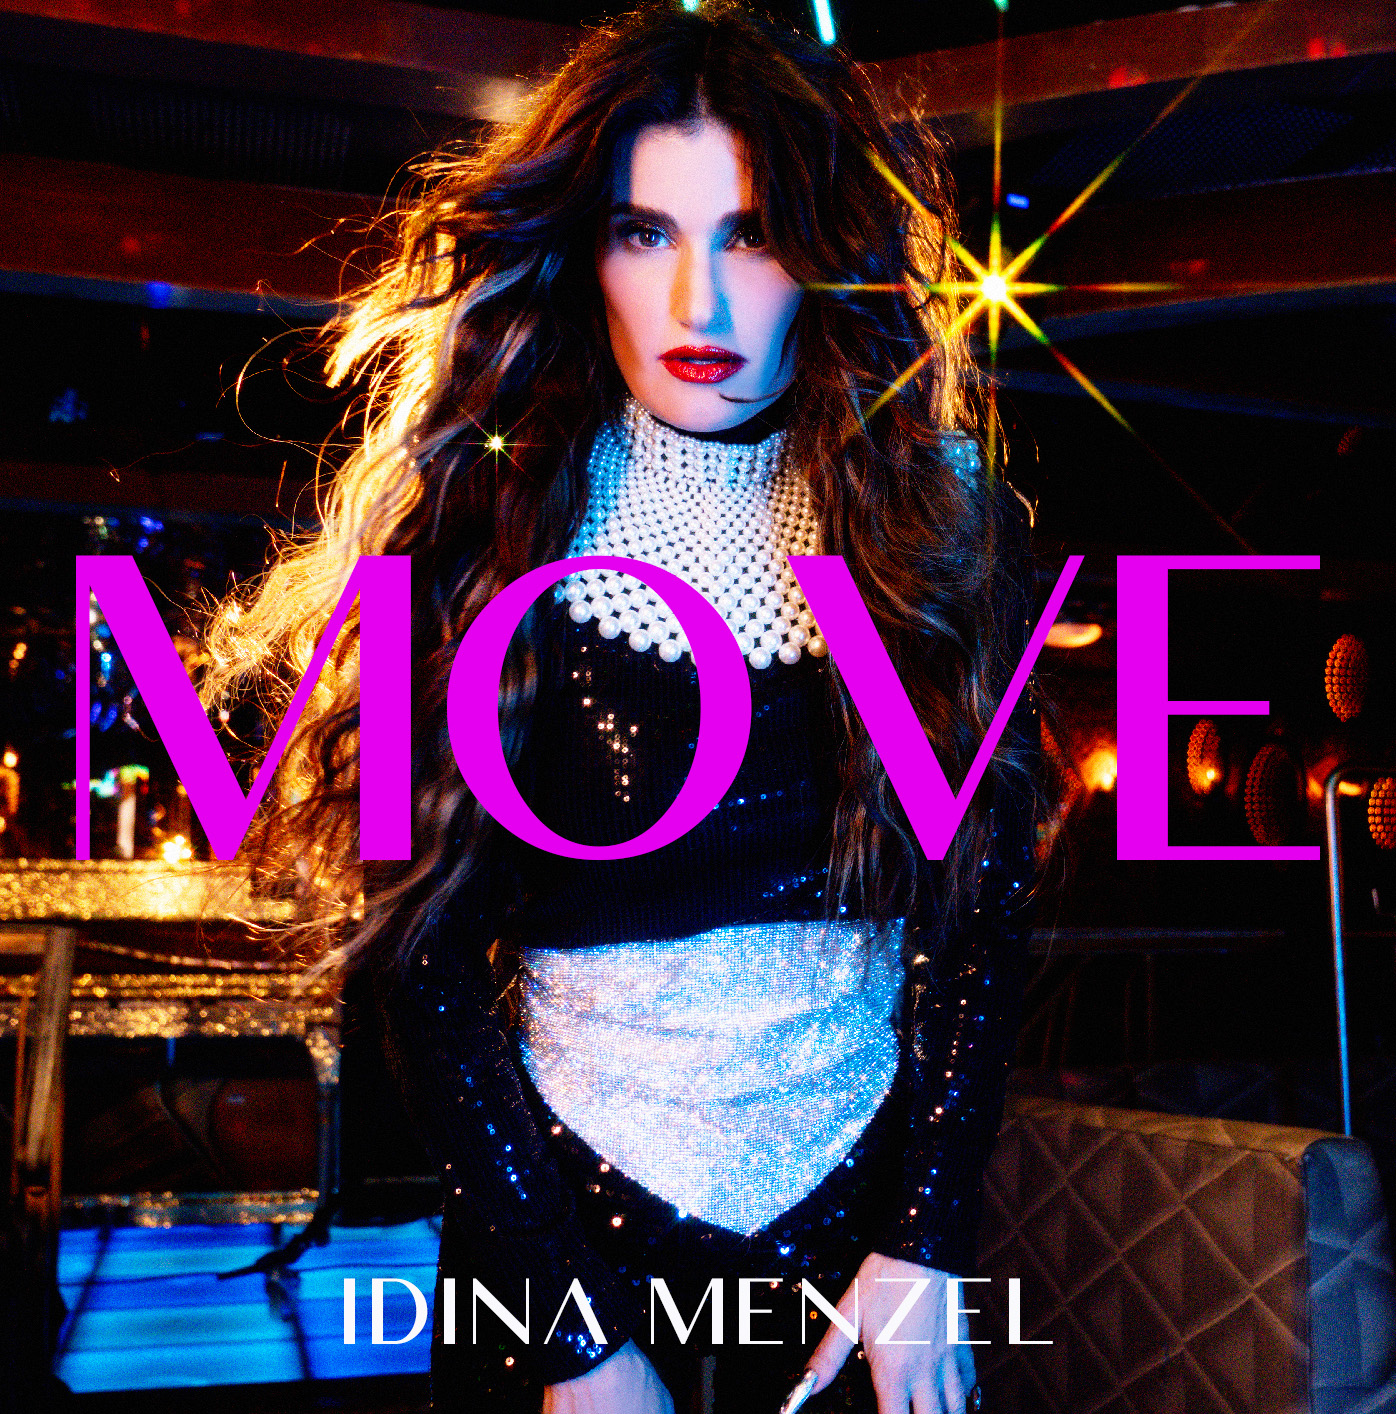 Idina Menzel - "Move" single cover